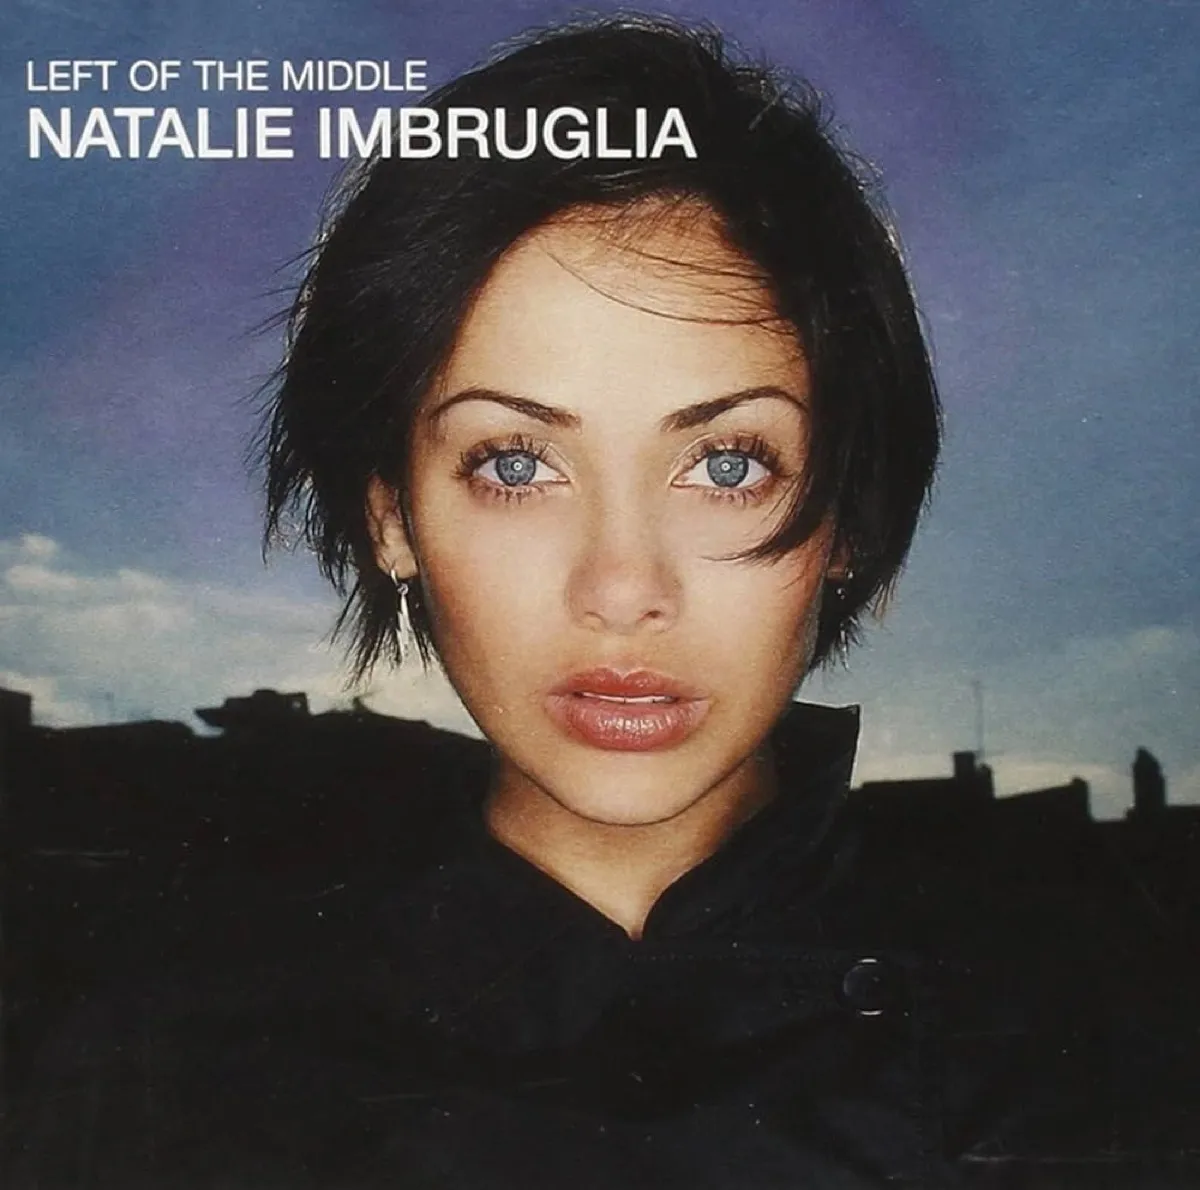 Natalie Imbruglia "Left of the Middle" album cover